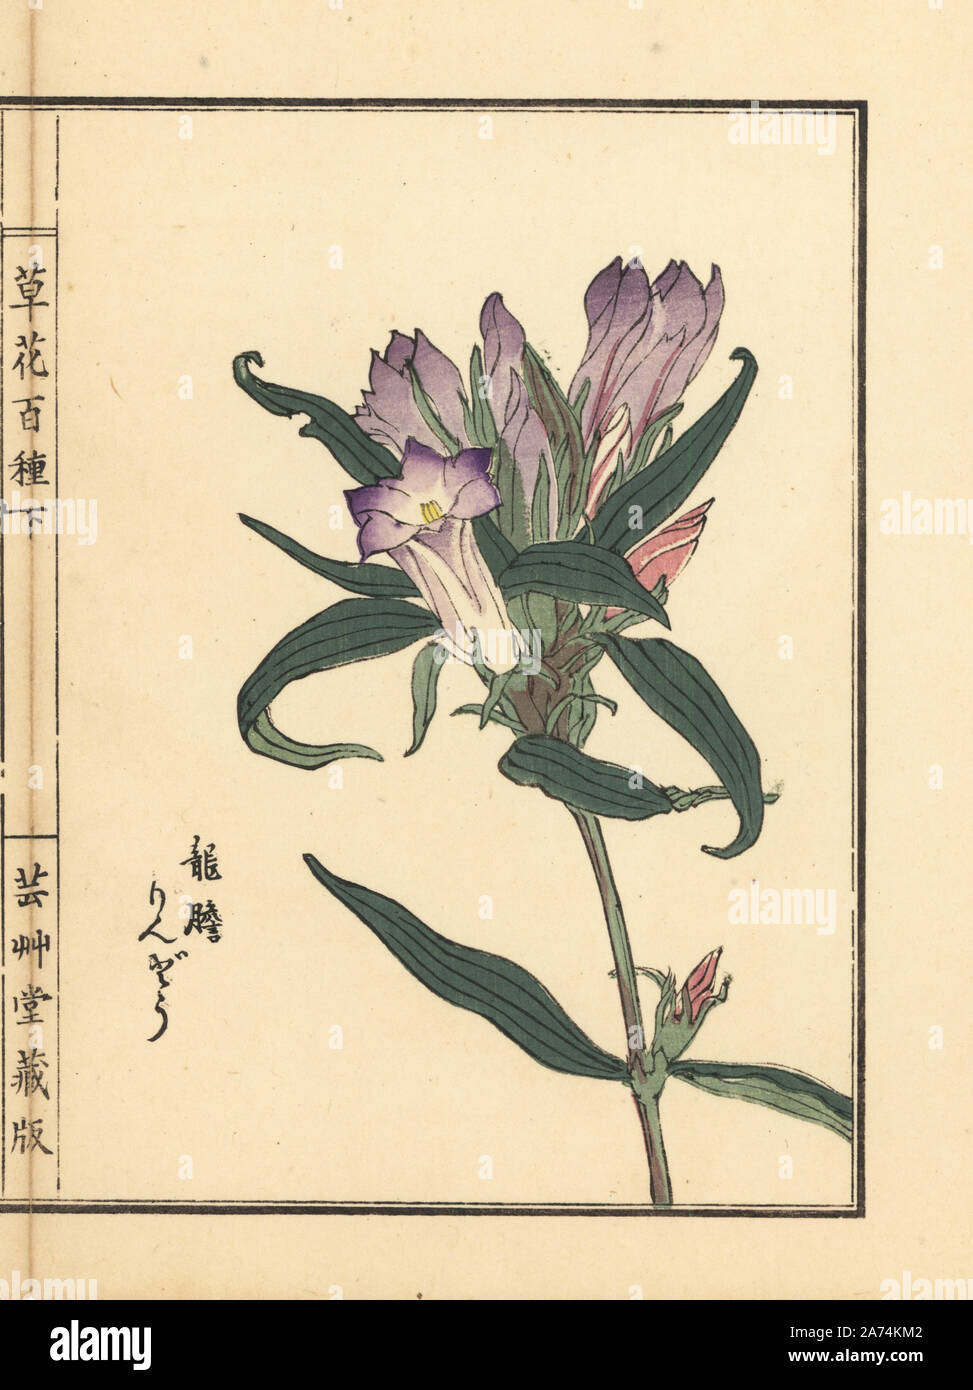 Rindou or Japanese gentian, Gentiana scabra var. buergeri. Handcoloured woodblock print by Kono Bairei from Kusa Bana Hyakushu (One Hundred Varieties of Flowers), Tokyo, Yamada, 1901. Stock Photo